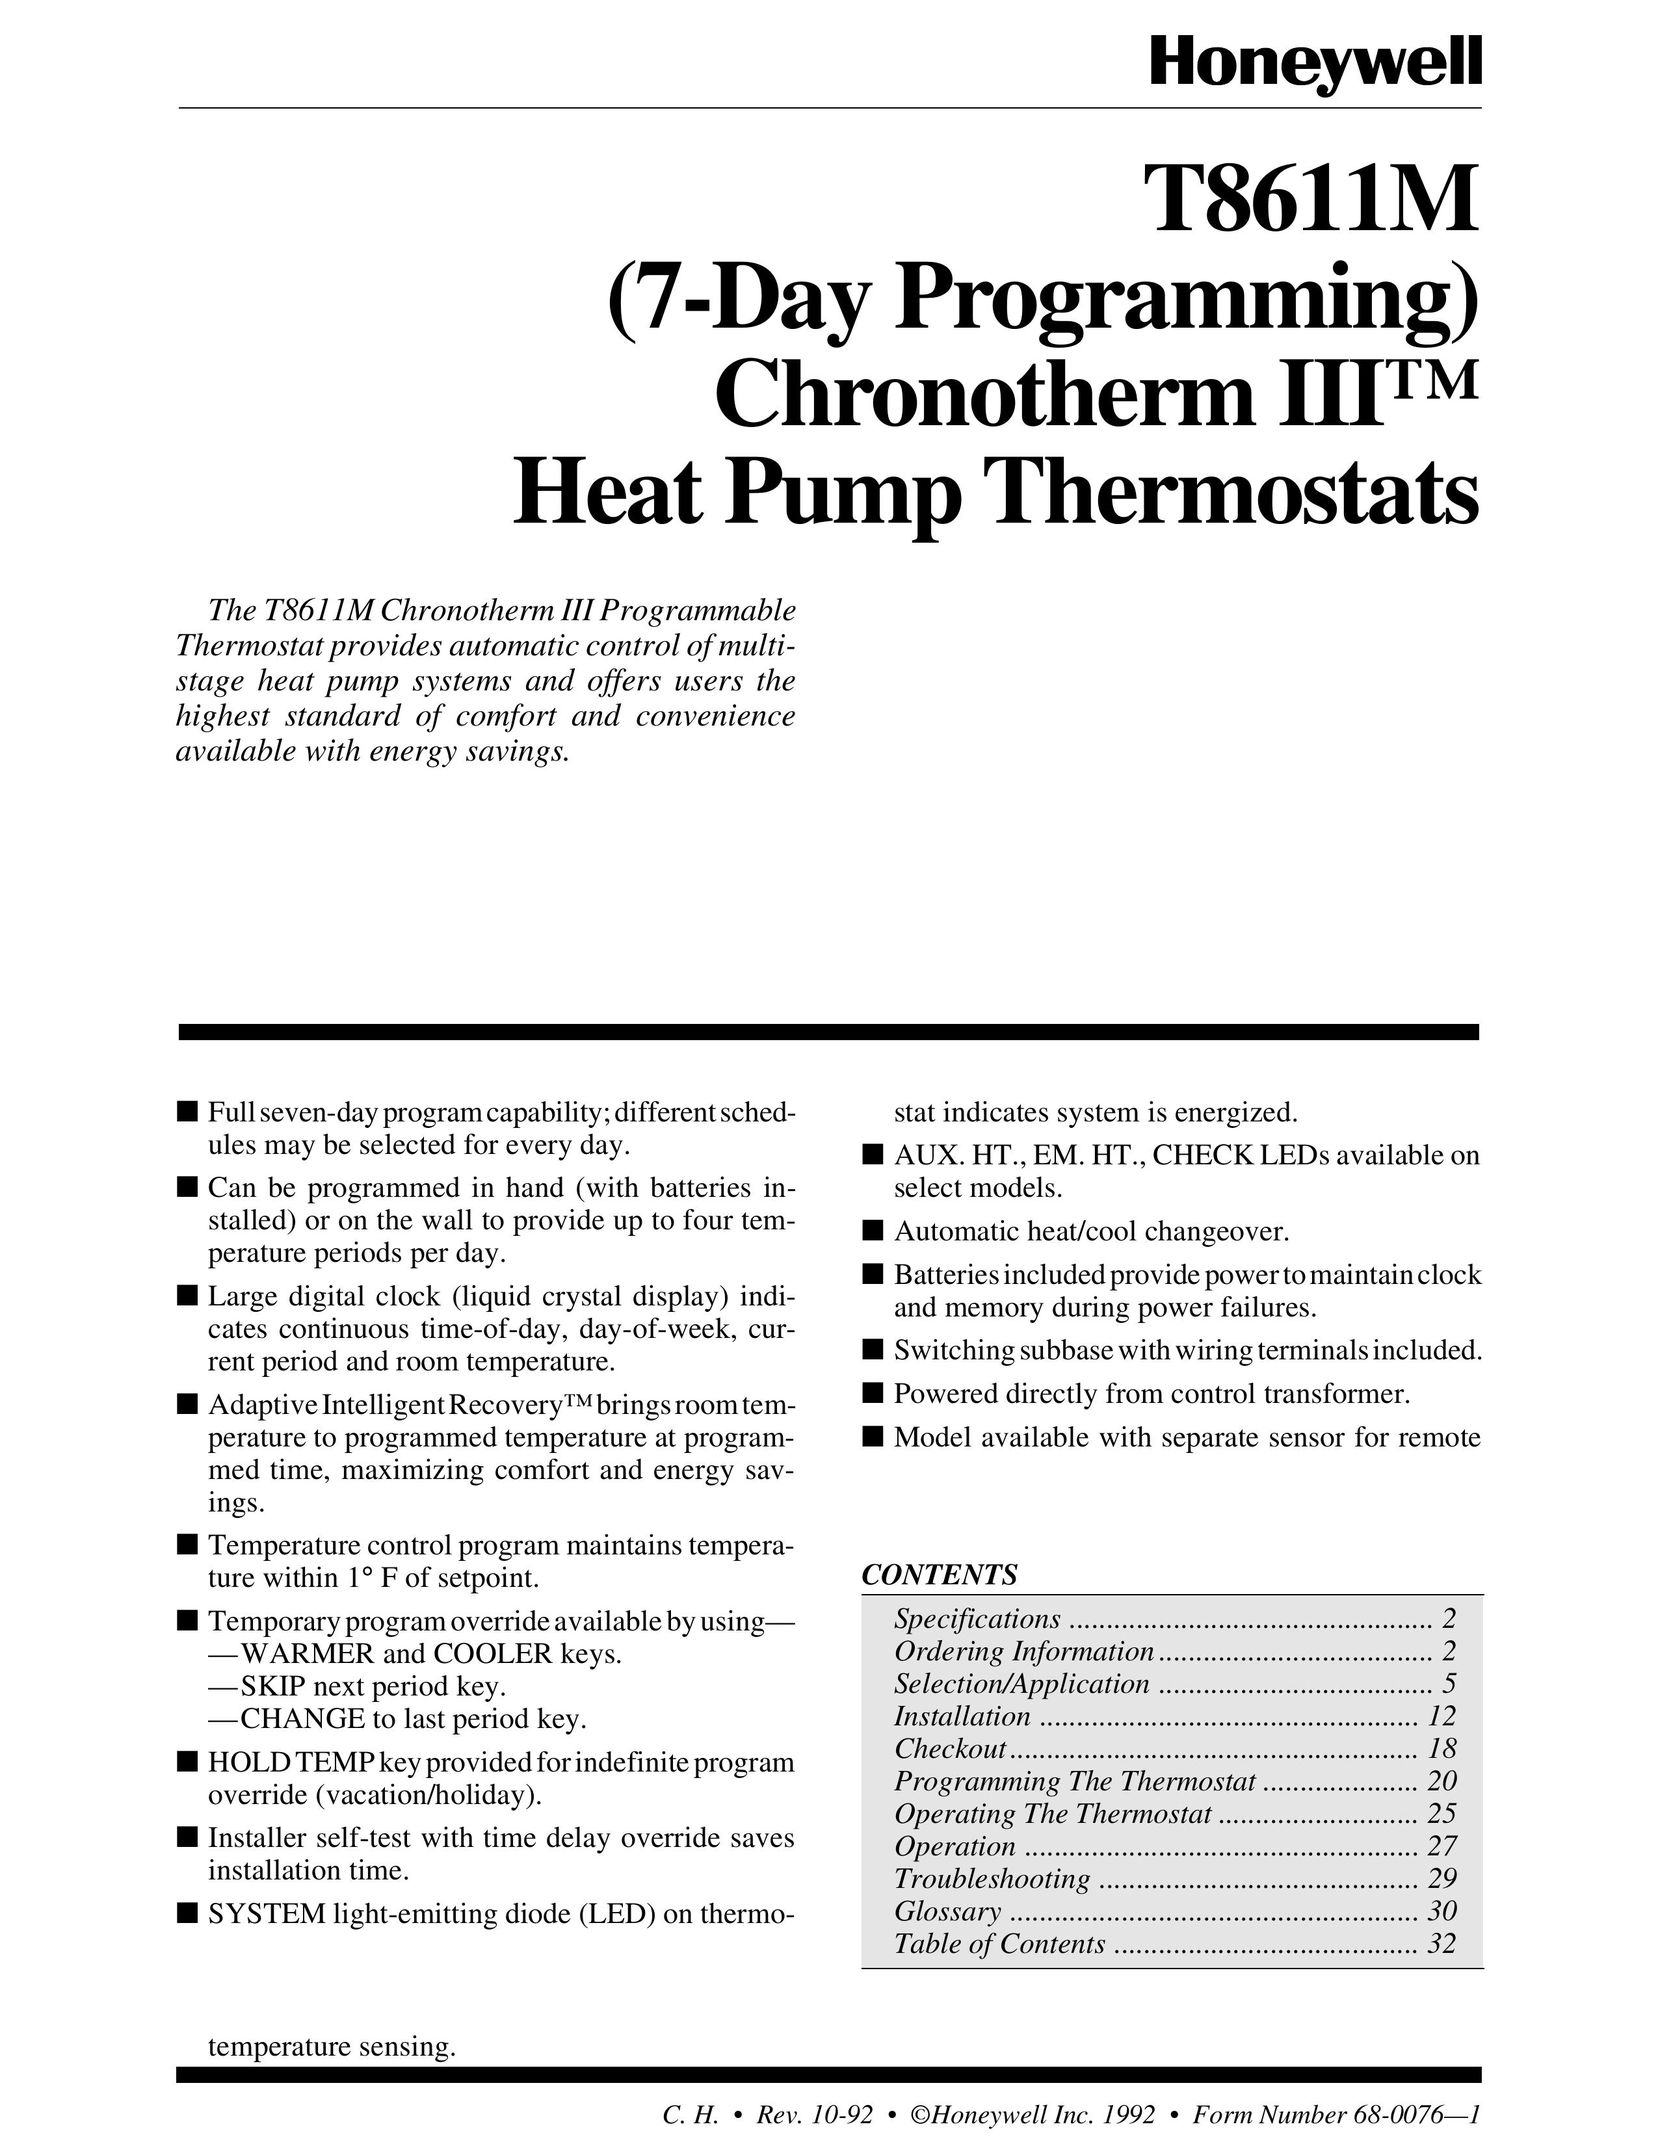 Honeywell T8611M Heat Pump User Manual